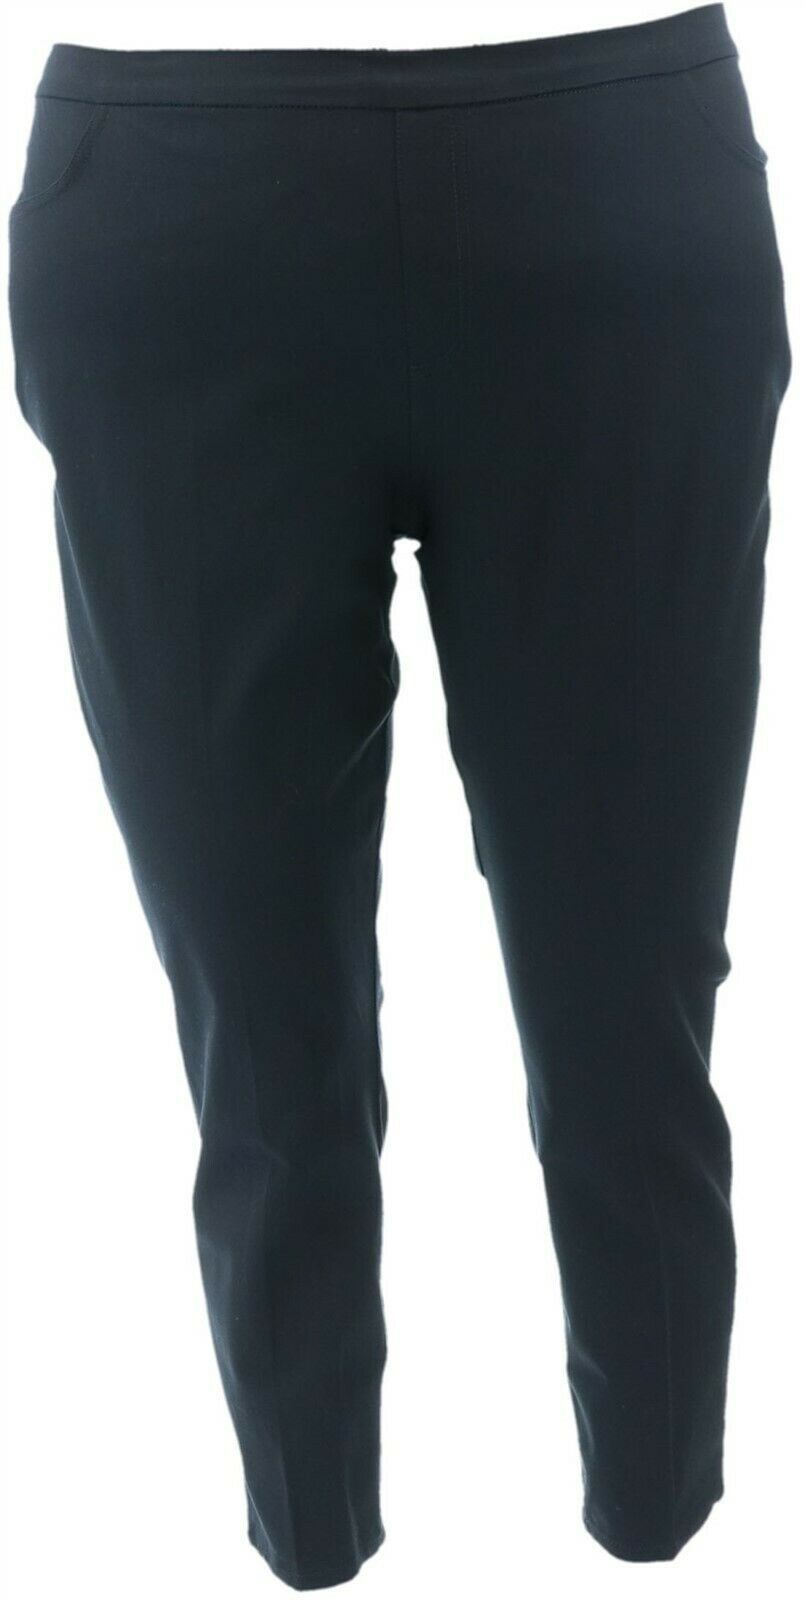 Isaac Mizrahi Petite 24/7 Stretch Slim Leg Pants Pockets Black 6P NEW A309567